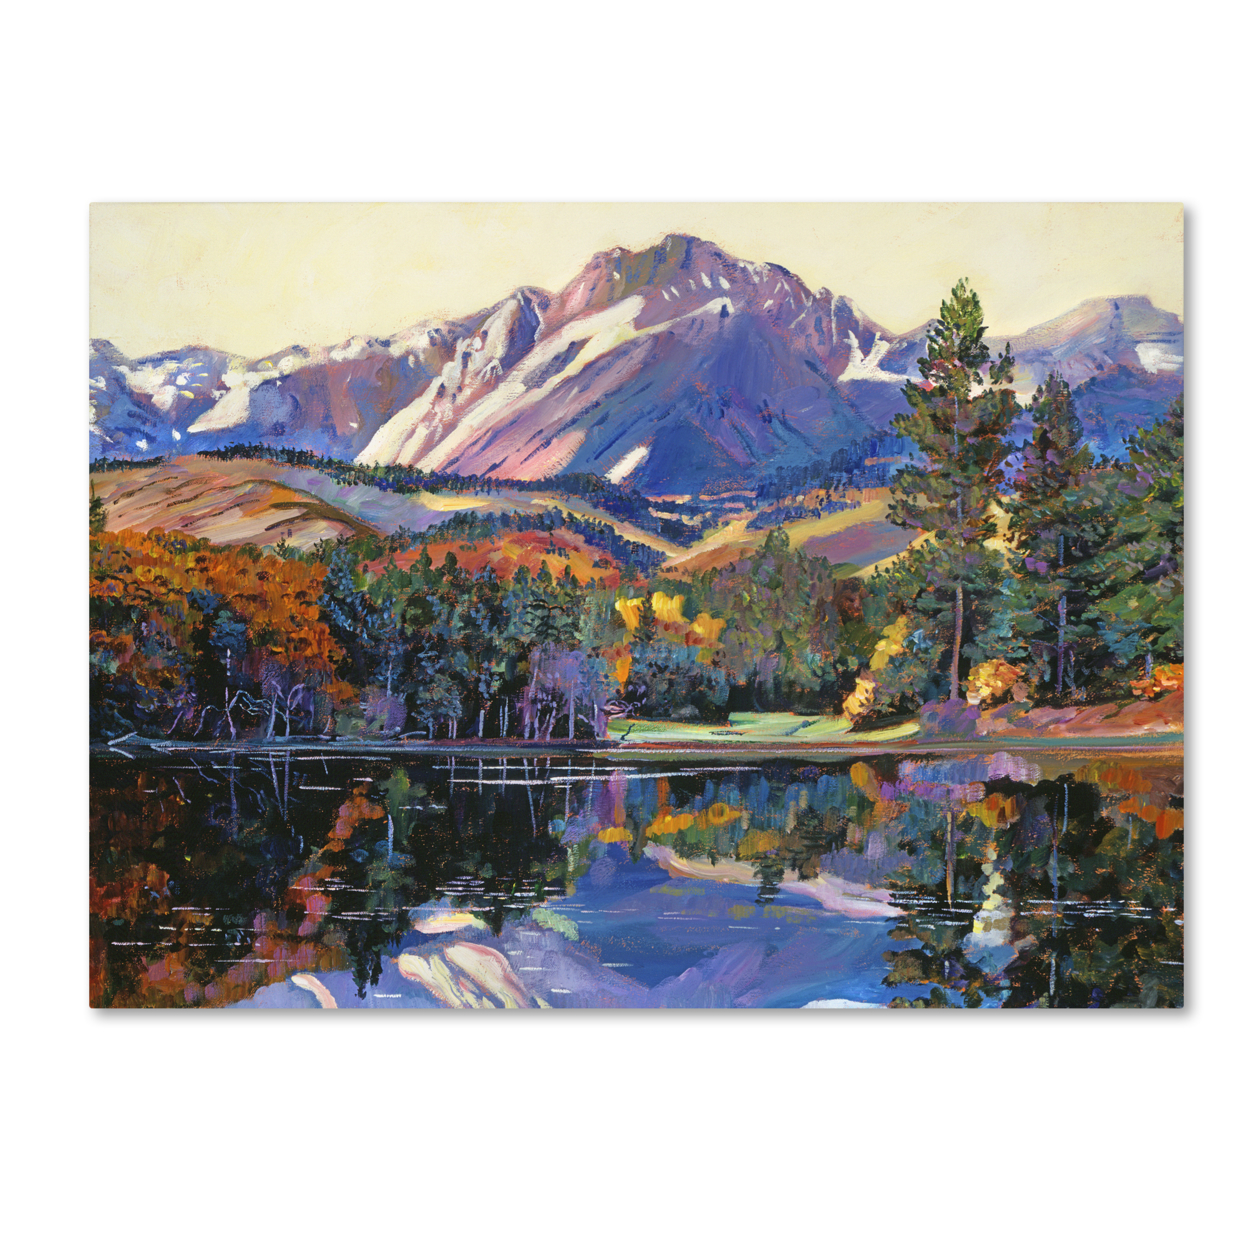 David Lloyd Glover 'Painter's Lake' Canvas Wall Art 35 X 47 Inches